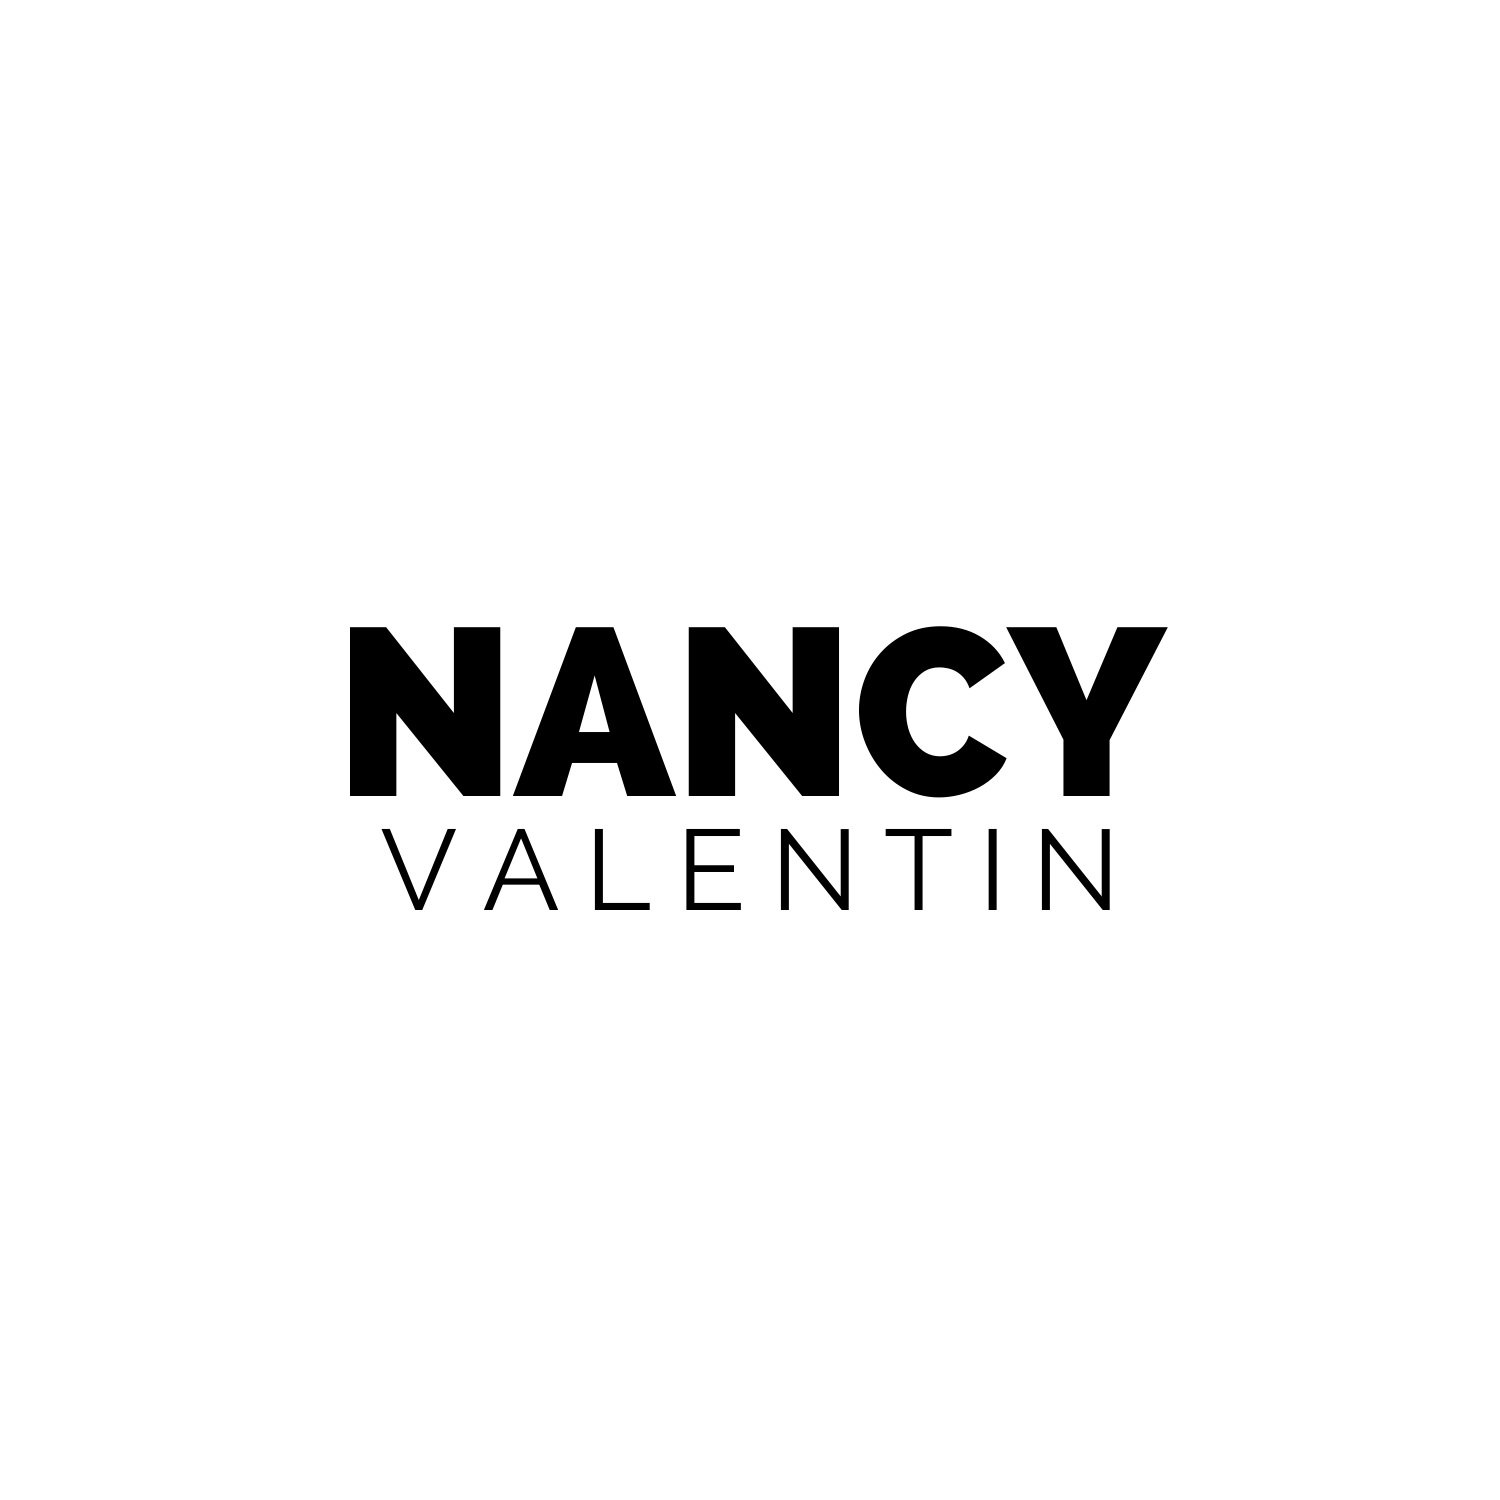 NANCY VALENTIN